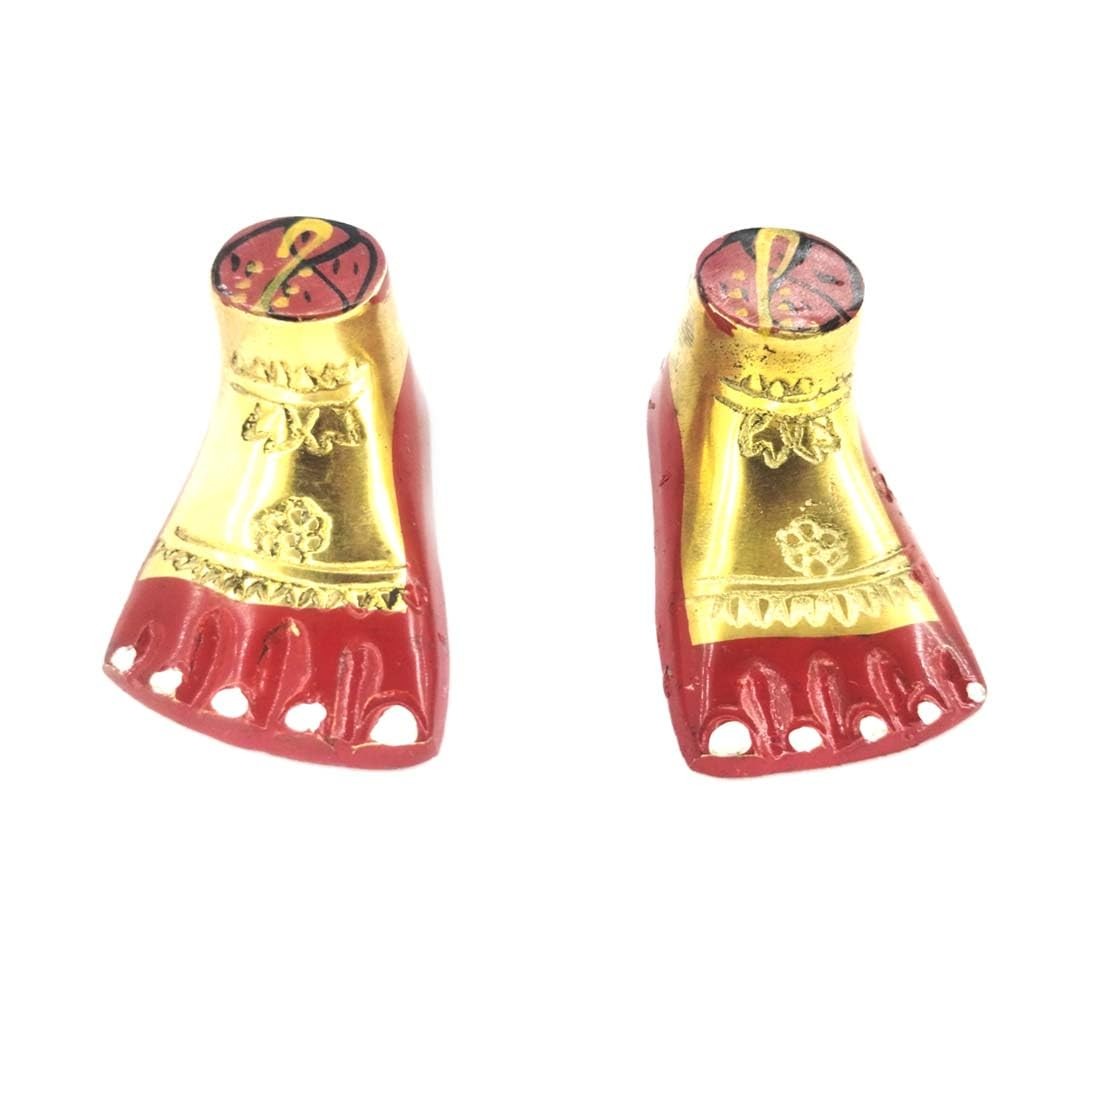 MAYAPURI Pital Tara Pith/Jay Bhavani Brass Feet, Maa Kali Charan, Brass (1 Pair)